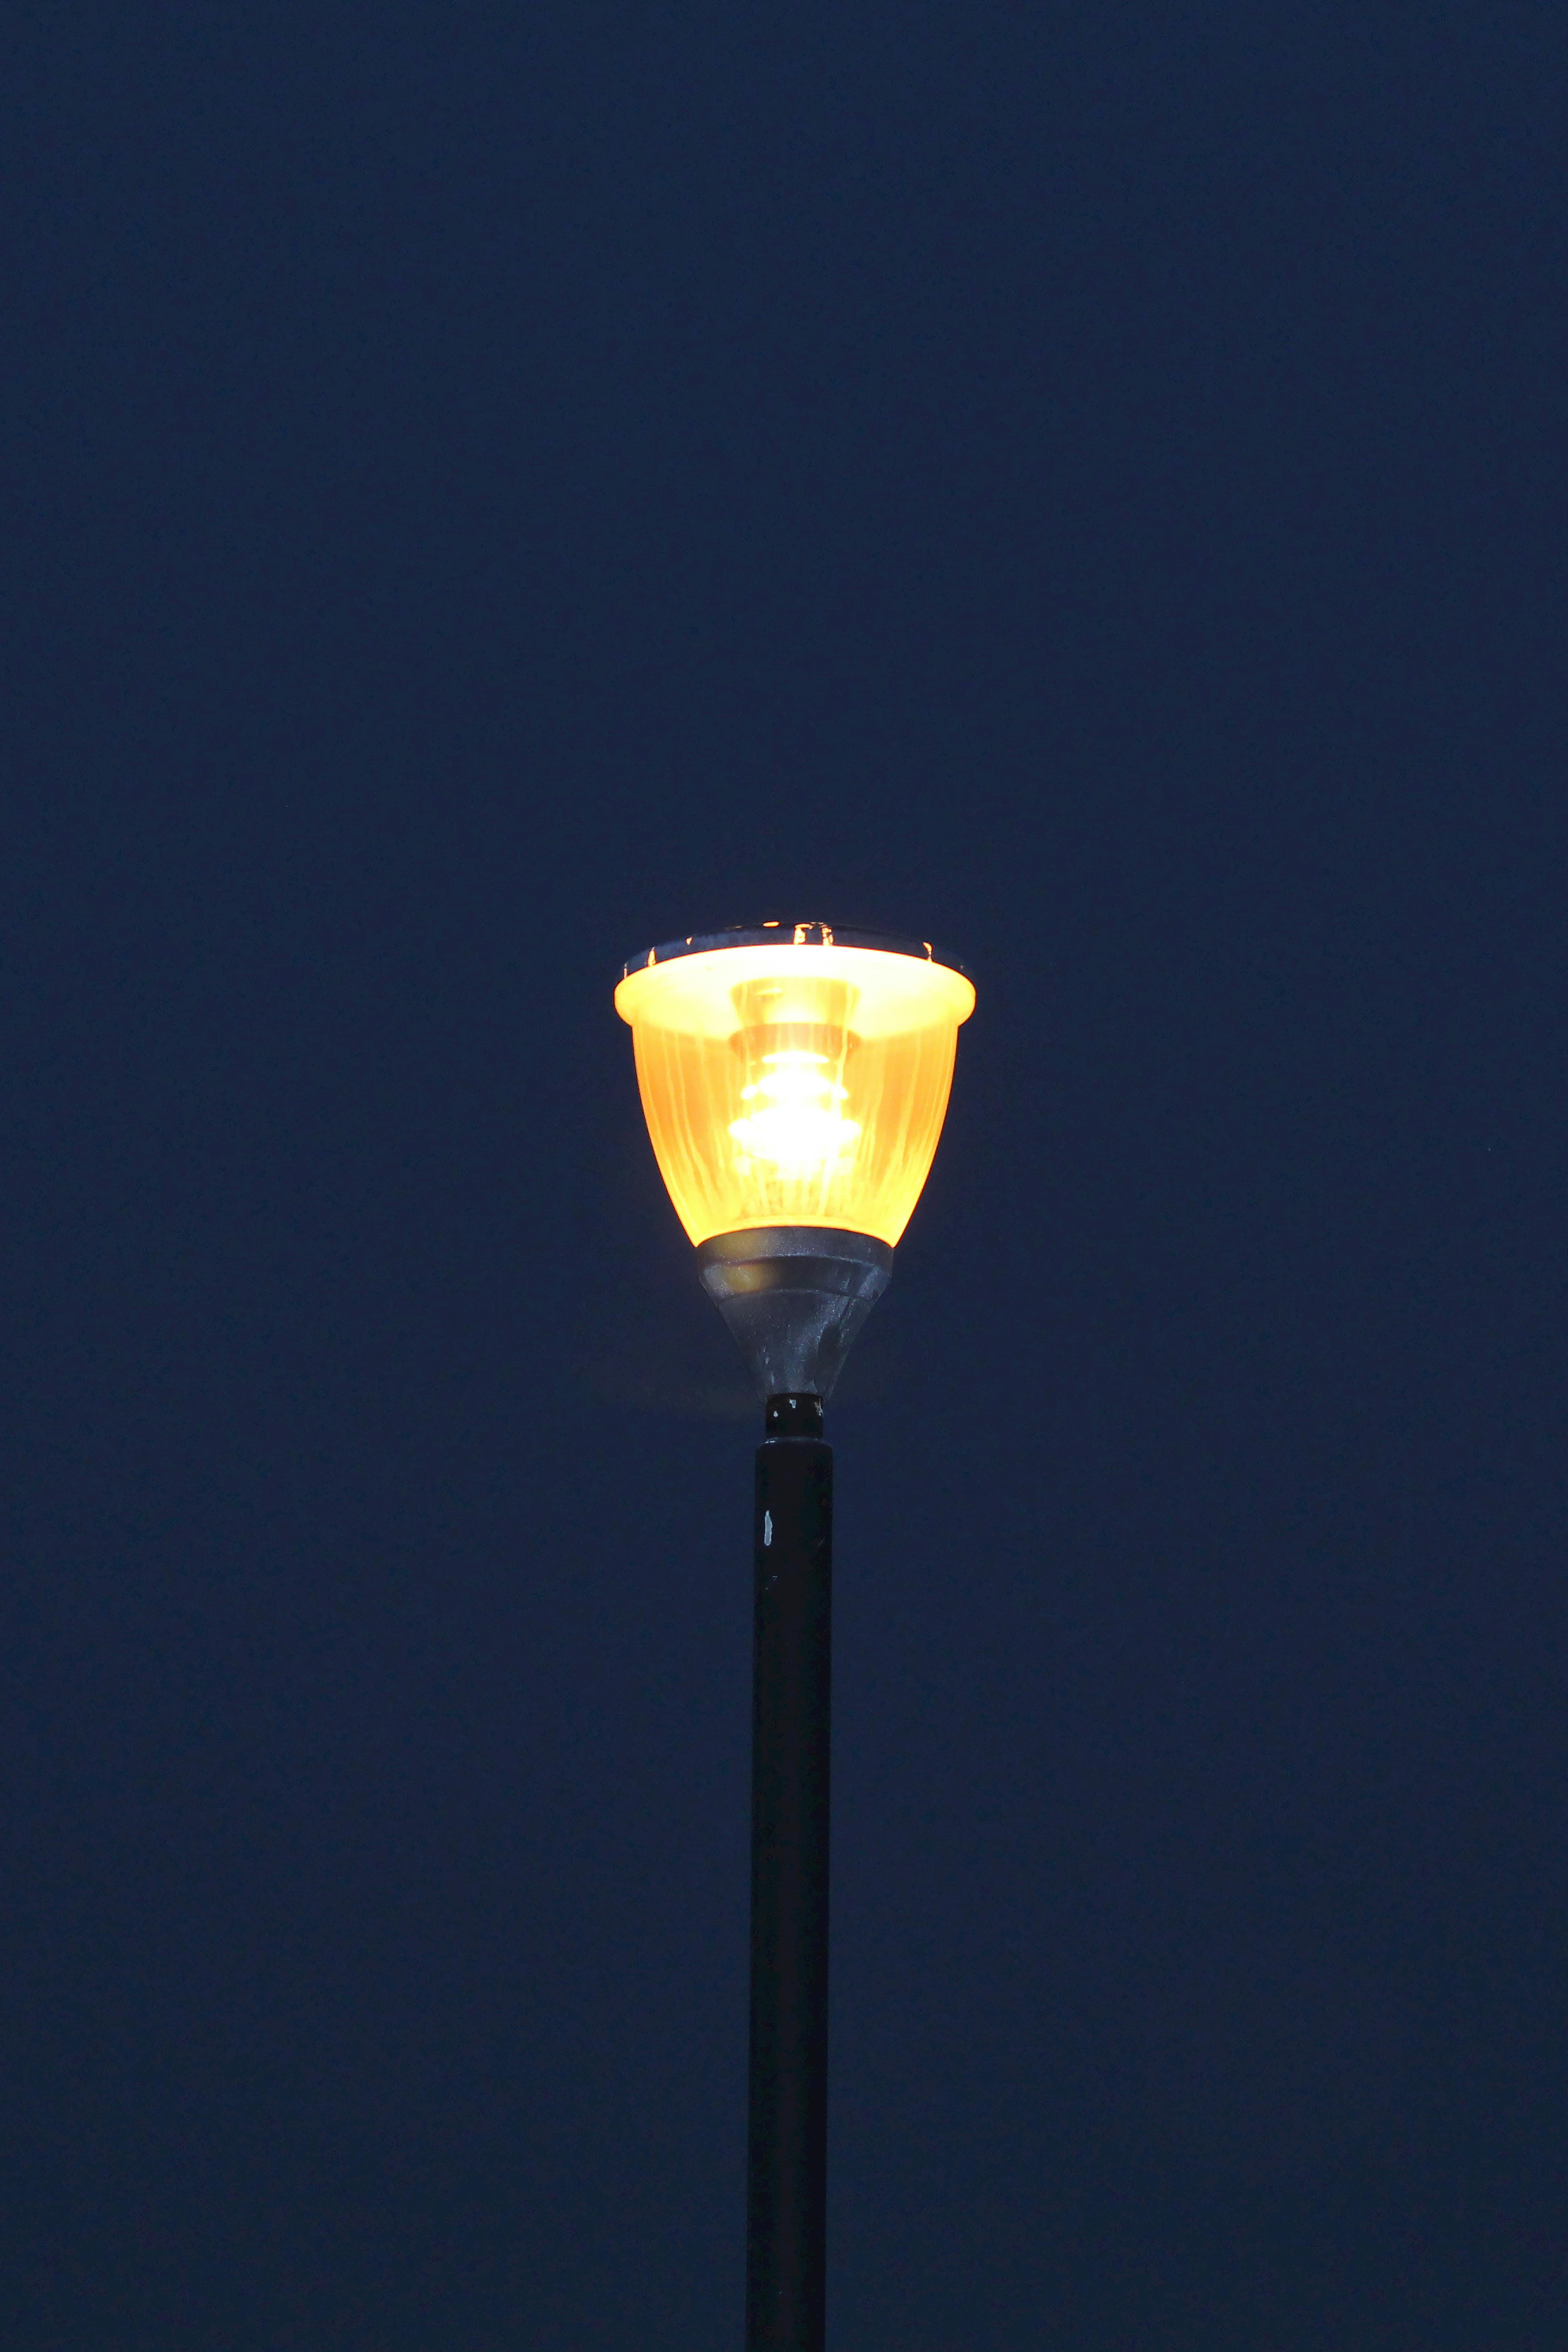 Free stock photo of lamp, lamp post, midnight